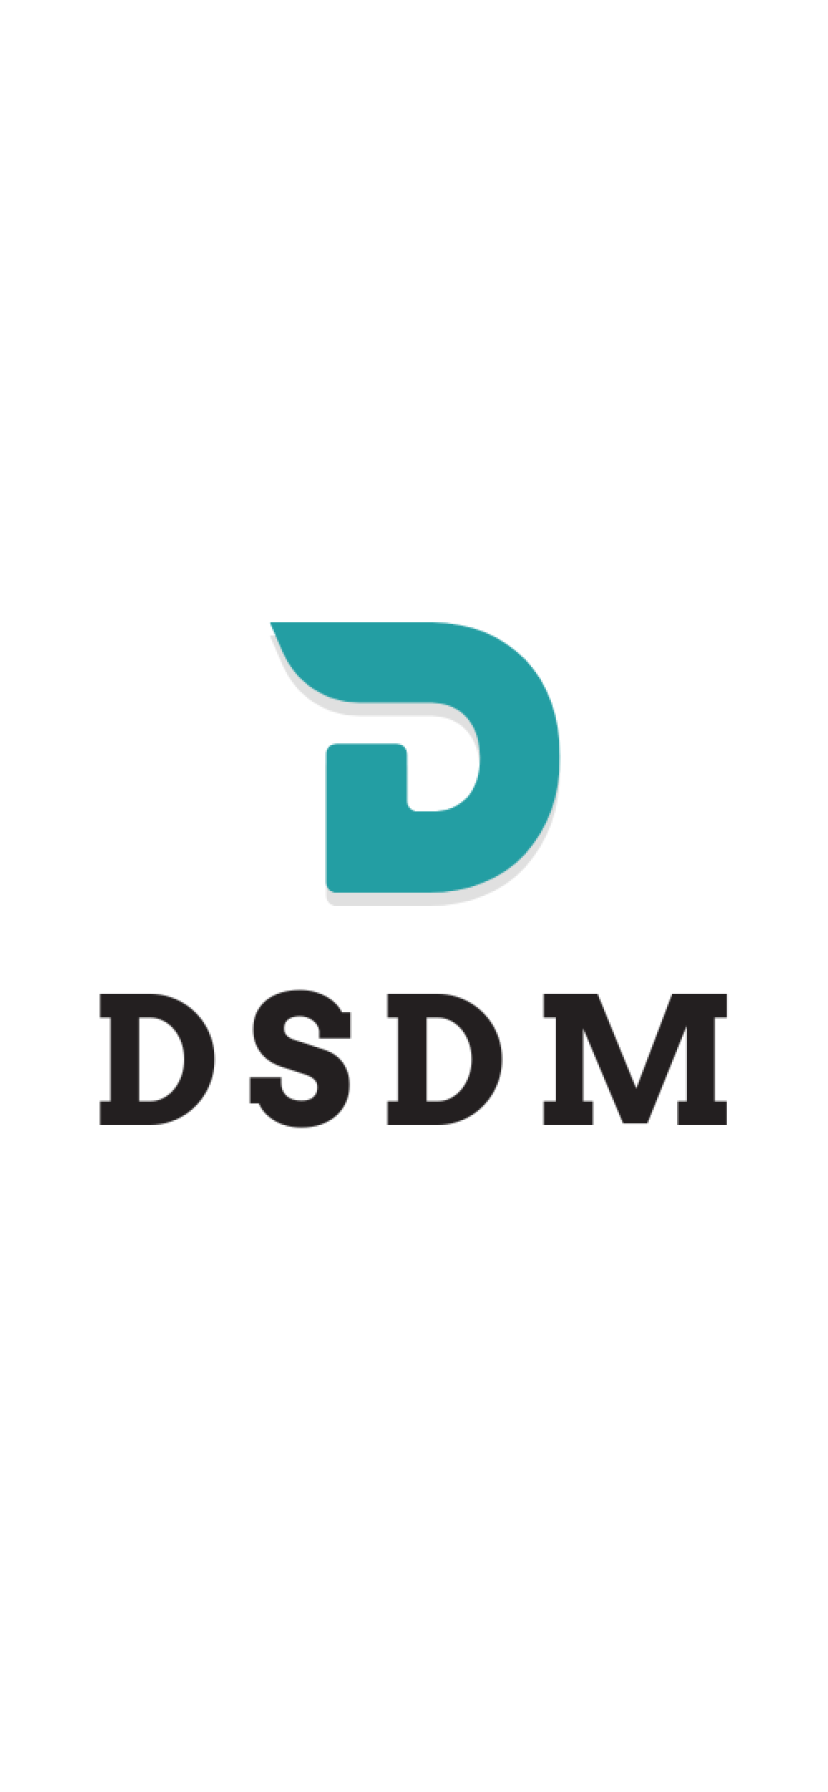 DSDM.com Domain Name For Sale